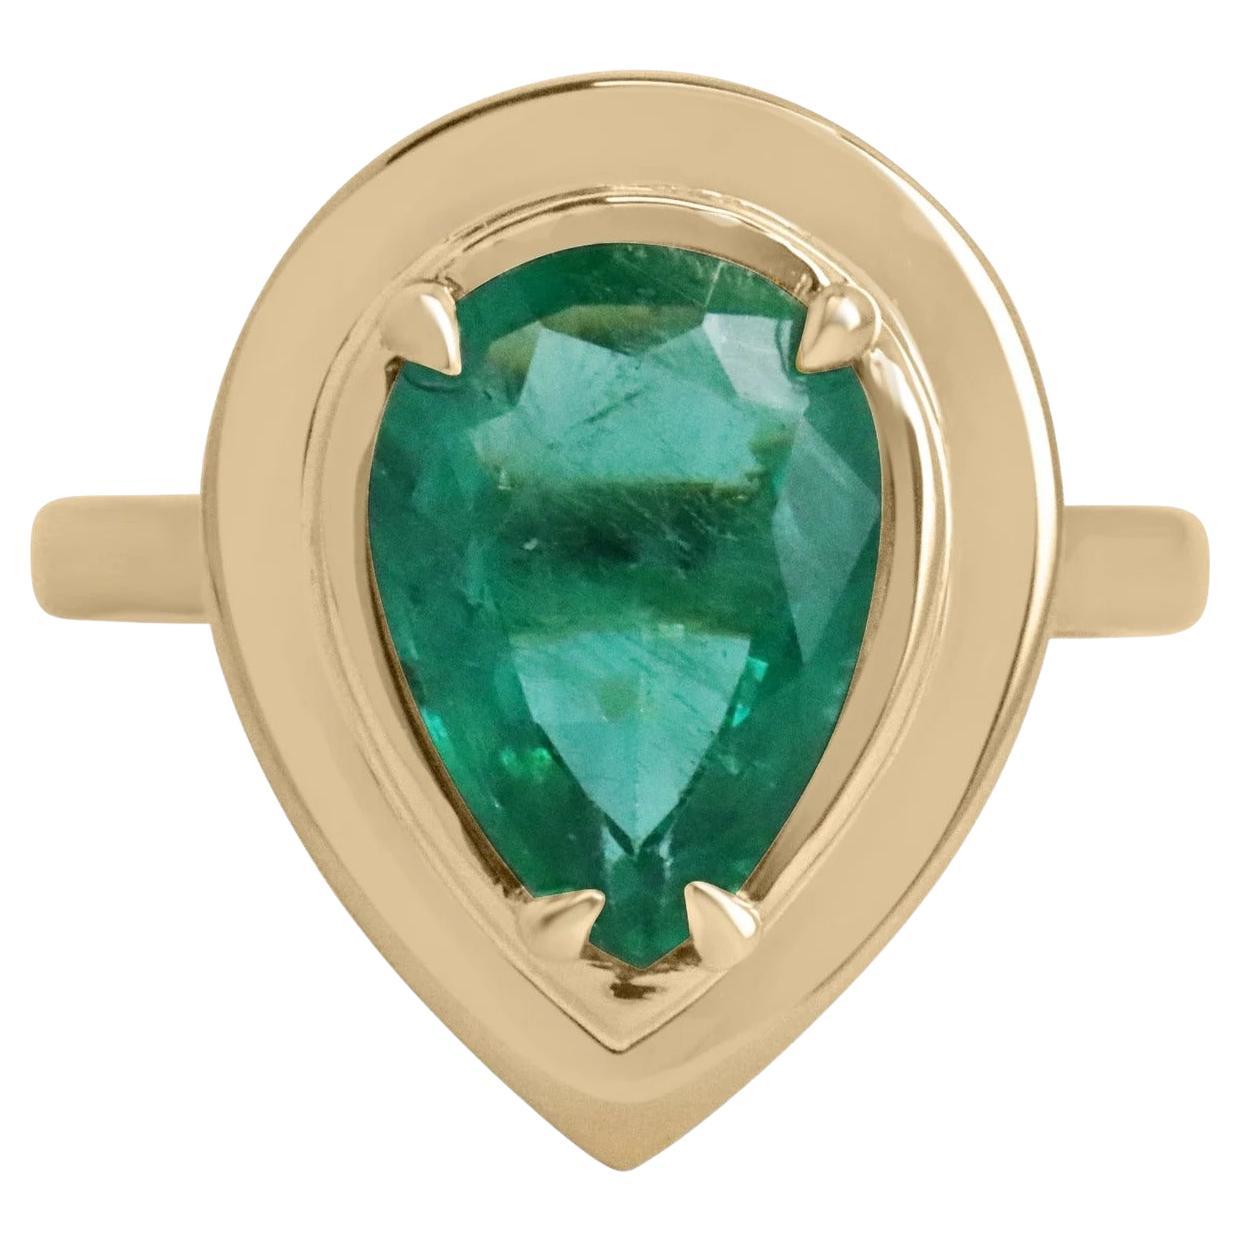 3.10 Carat Pear Cut Emerald Solitaire Half Bezel Statement Ring Gold 18K